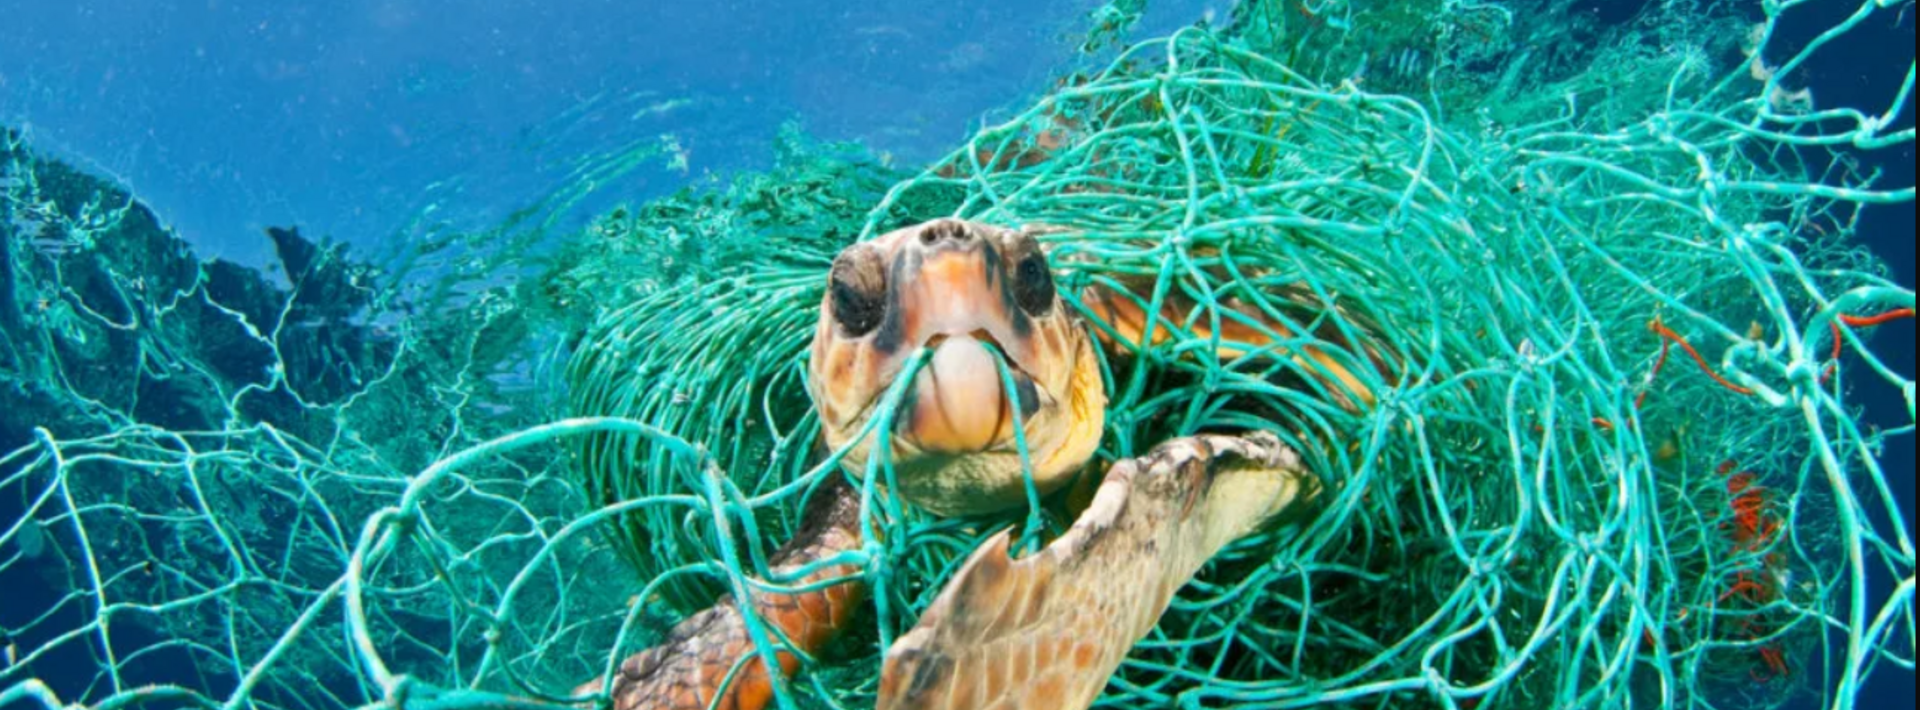 A turtle in a plastic net 